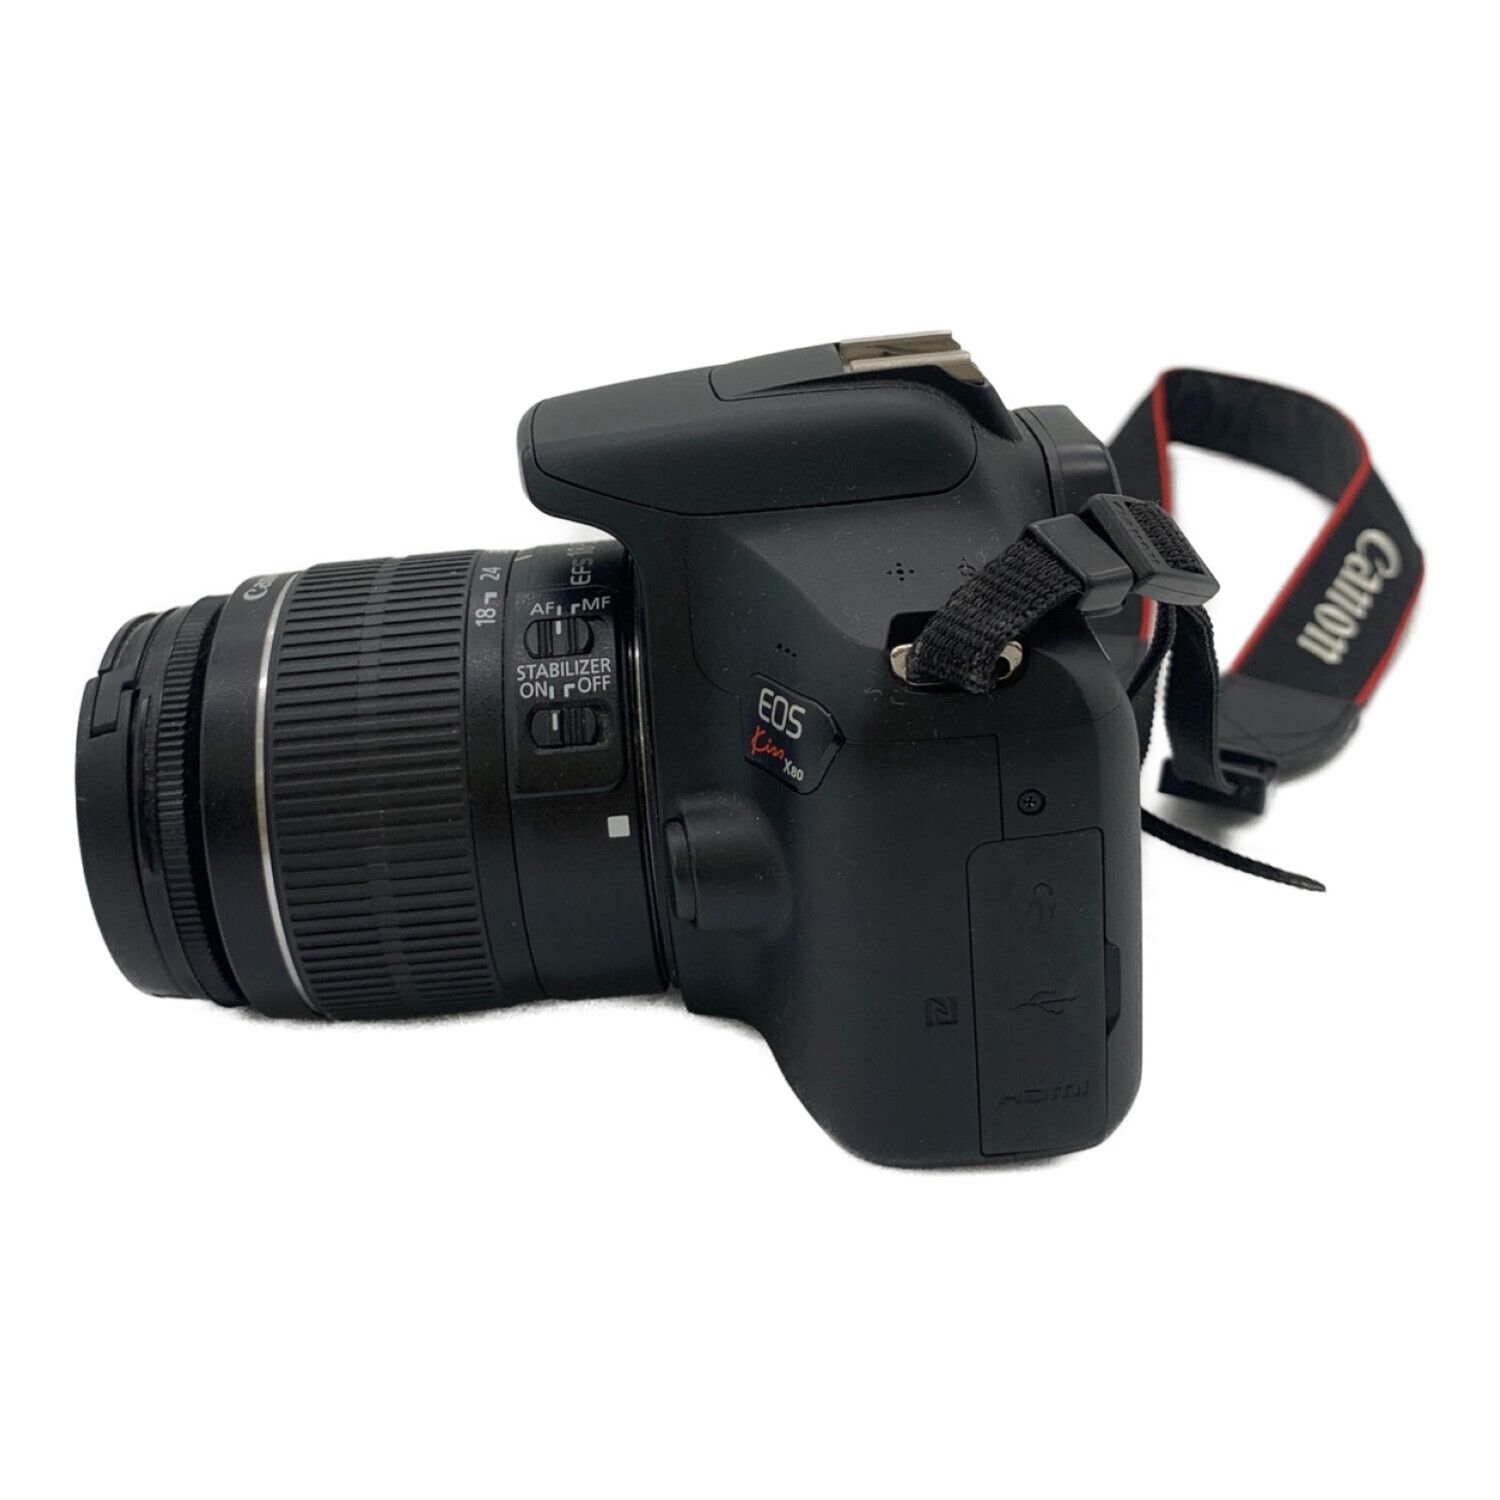 CANON (キャノン) デジタル一眼レフカメラ DS126621 1800万画素 APS-C 